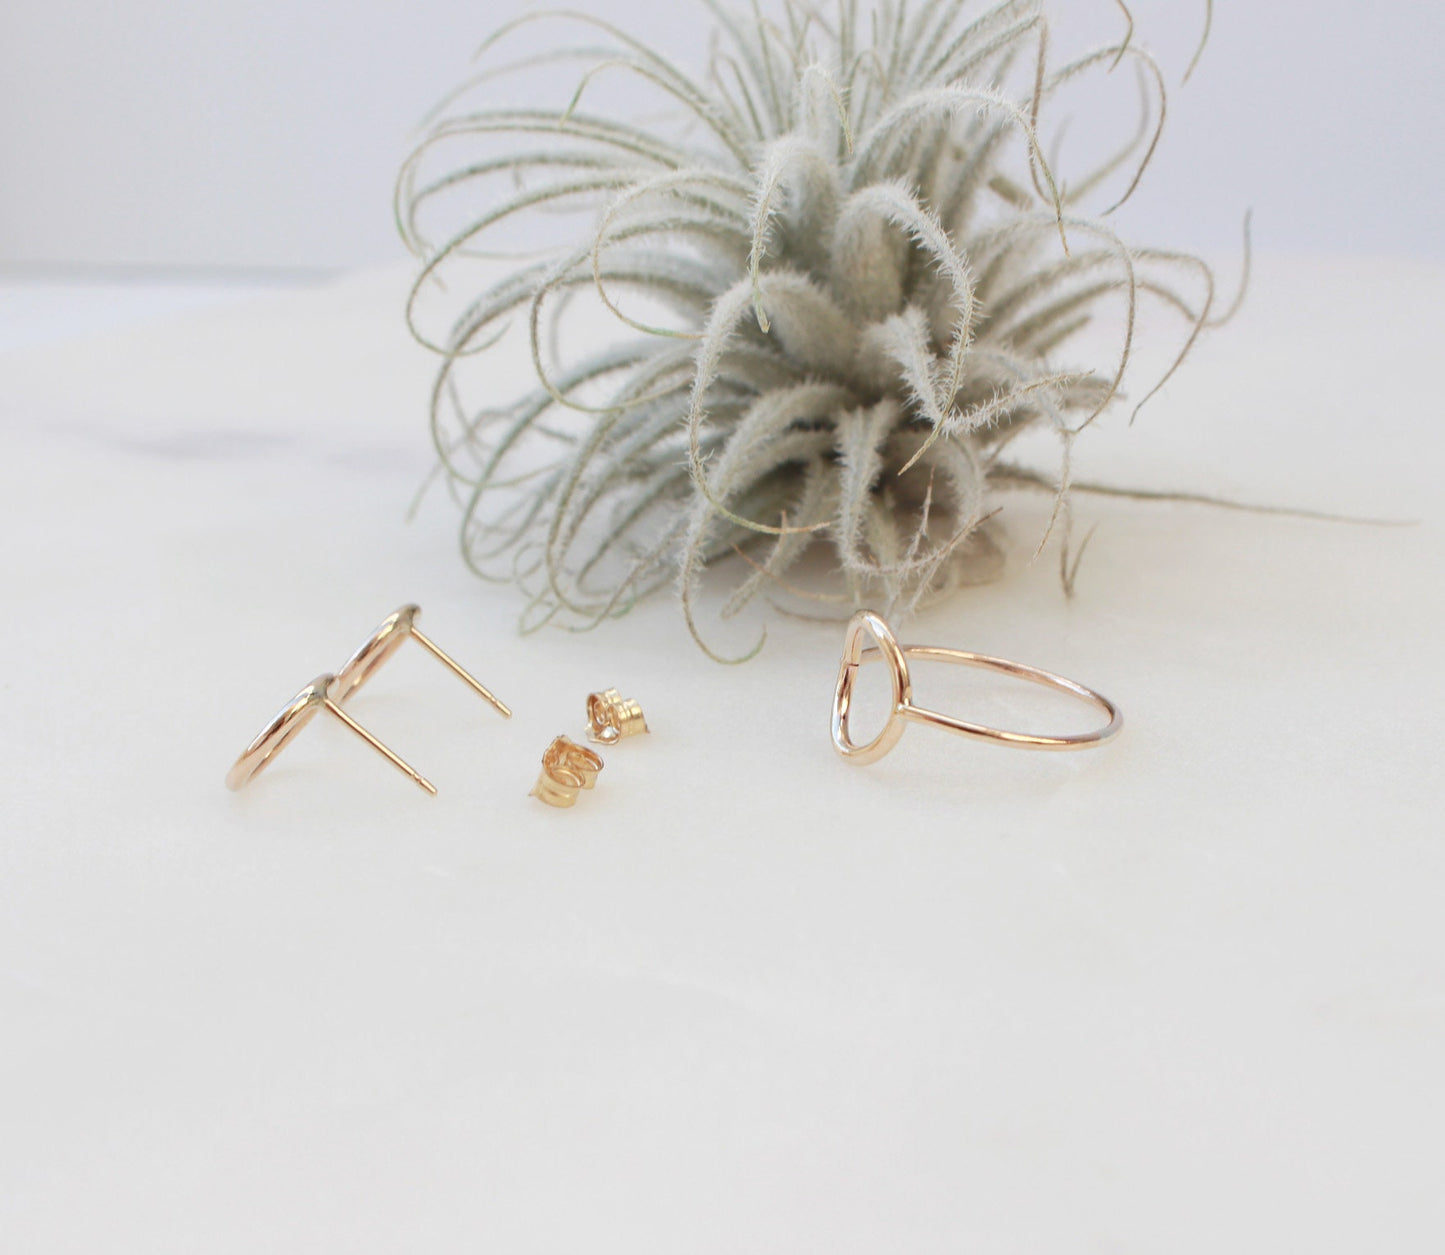 Gold Circle Stud Earrings - 14K Gold Filled, 10mm O Ring Circle